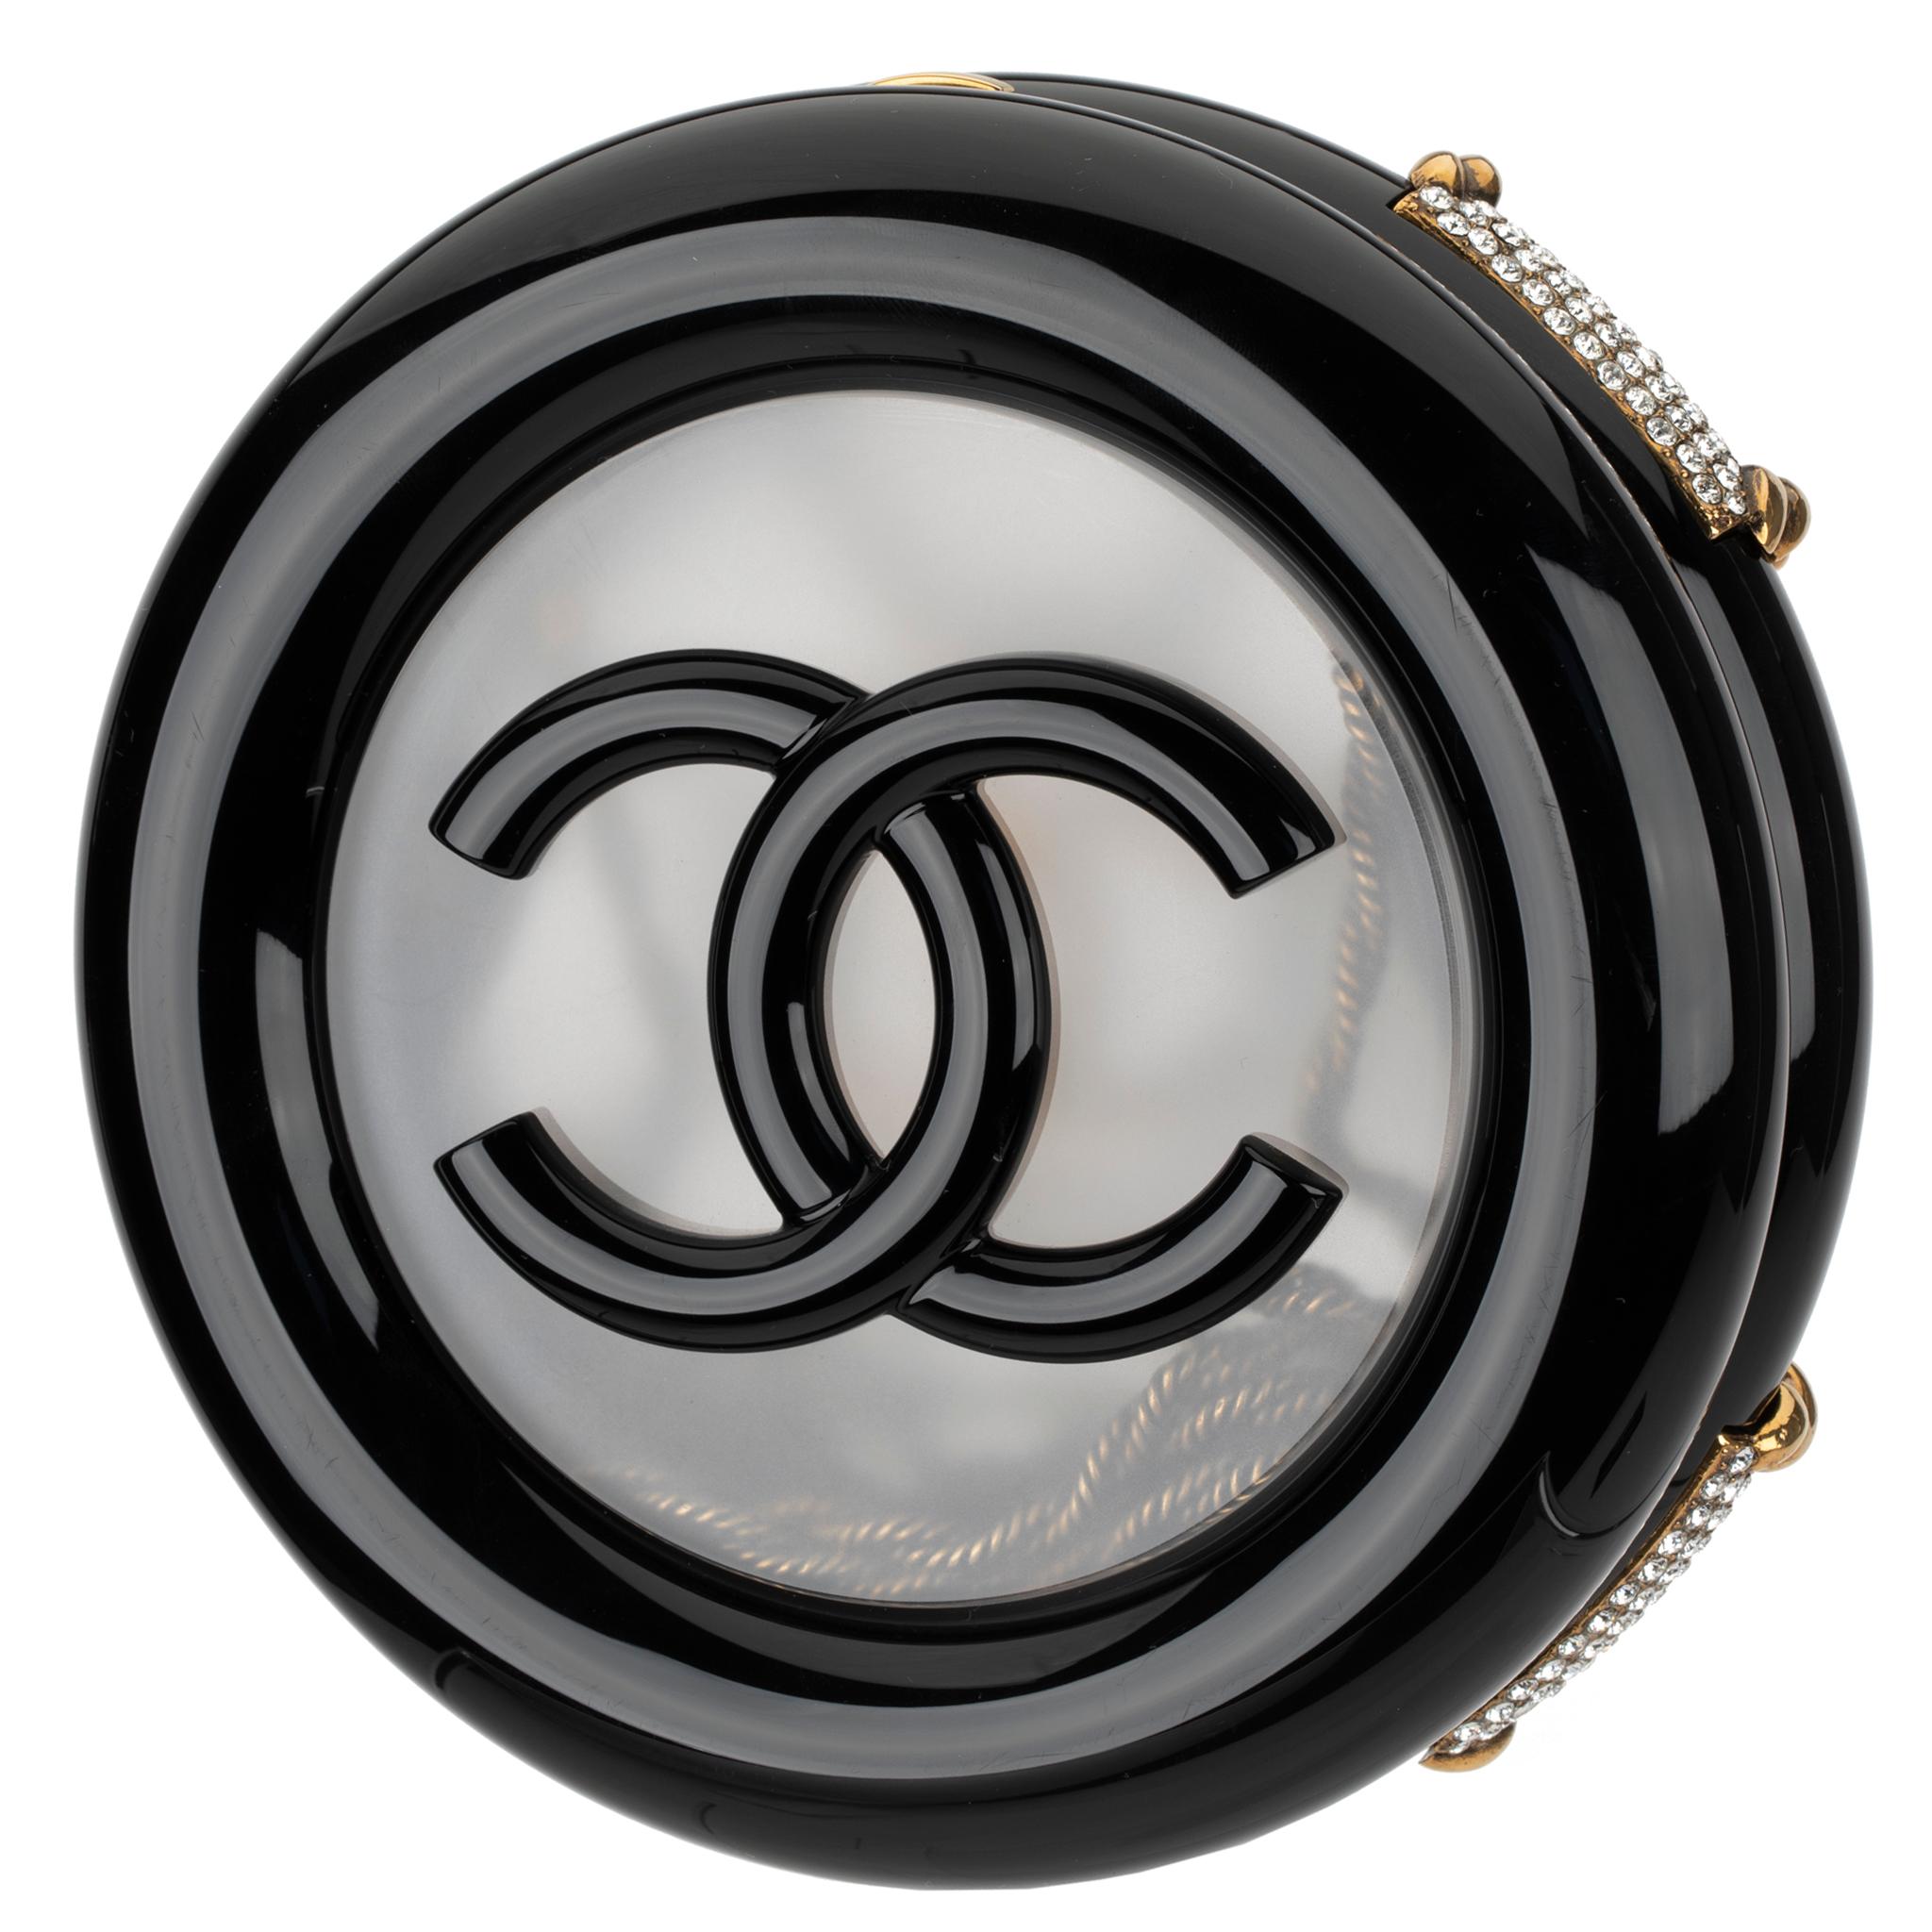 Chanel Minaudière Black, Gold & Clear Rescue Wheel Gold Tone Hardware 6